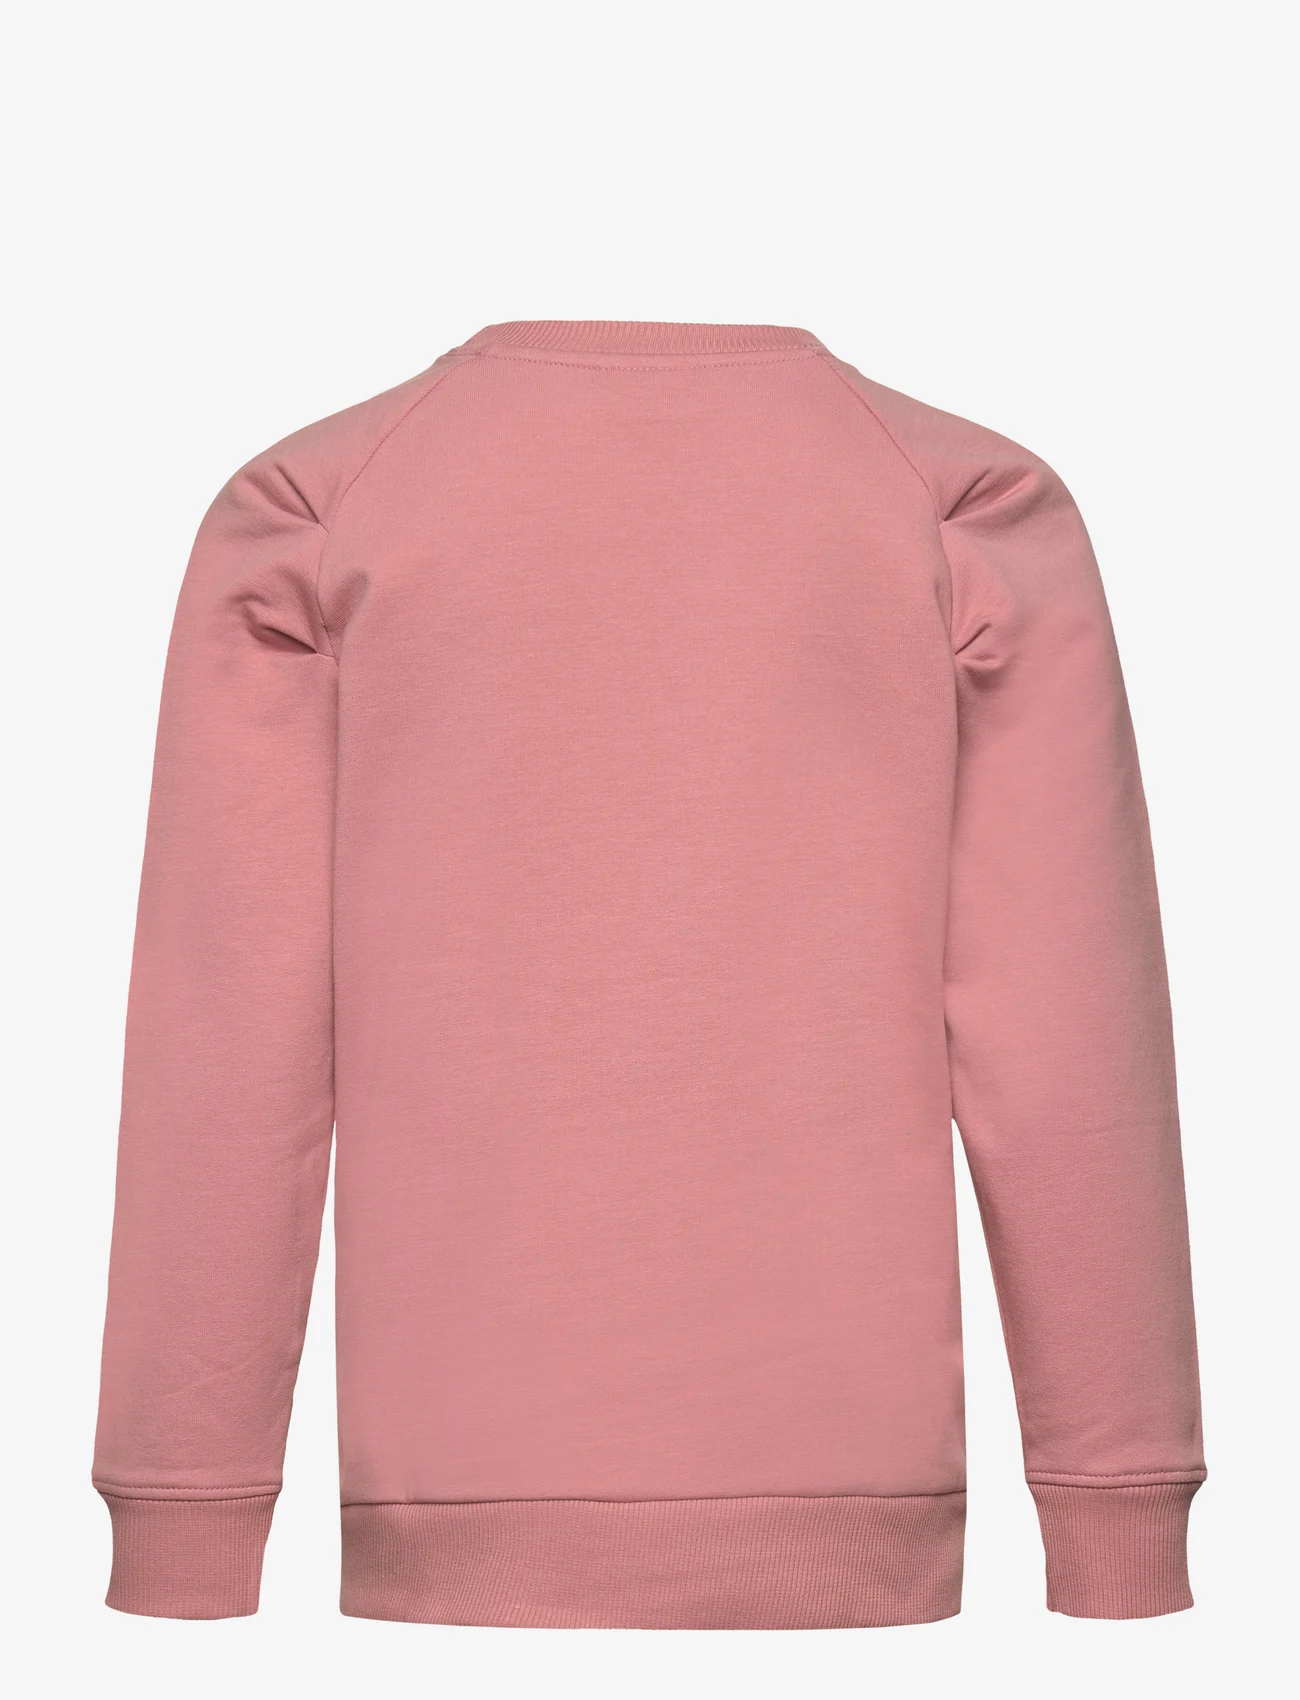 Minymo - Sweatshirt LS - ash rose - 1